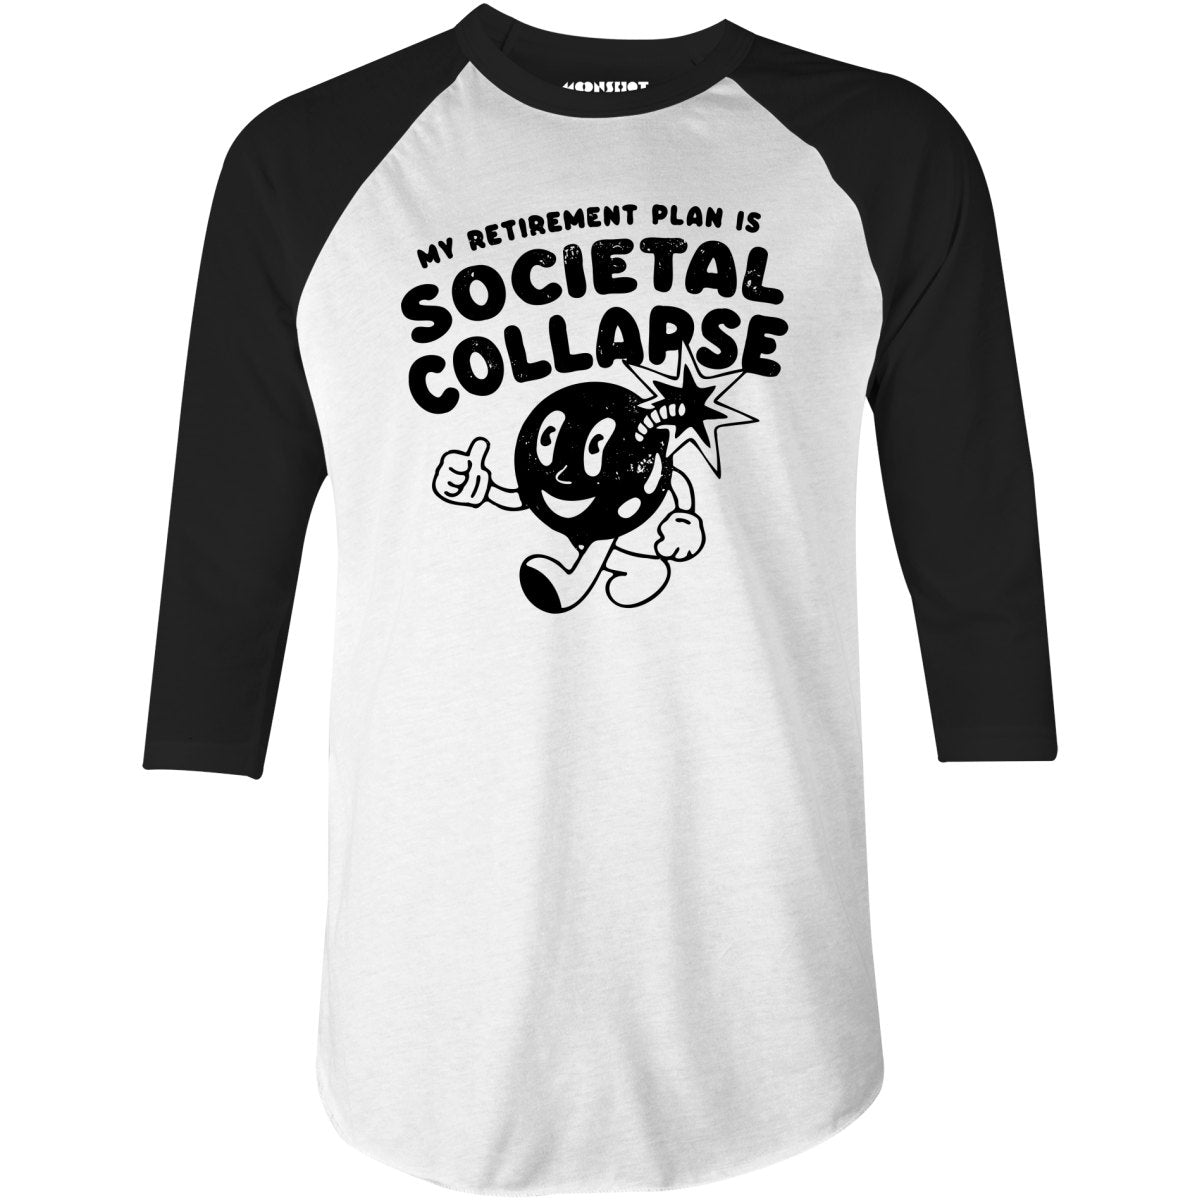 My Retirement Plan is Societal Collapse - 3/4 Sleeve Raglan T-Shirt